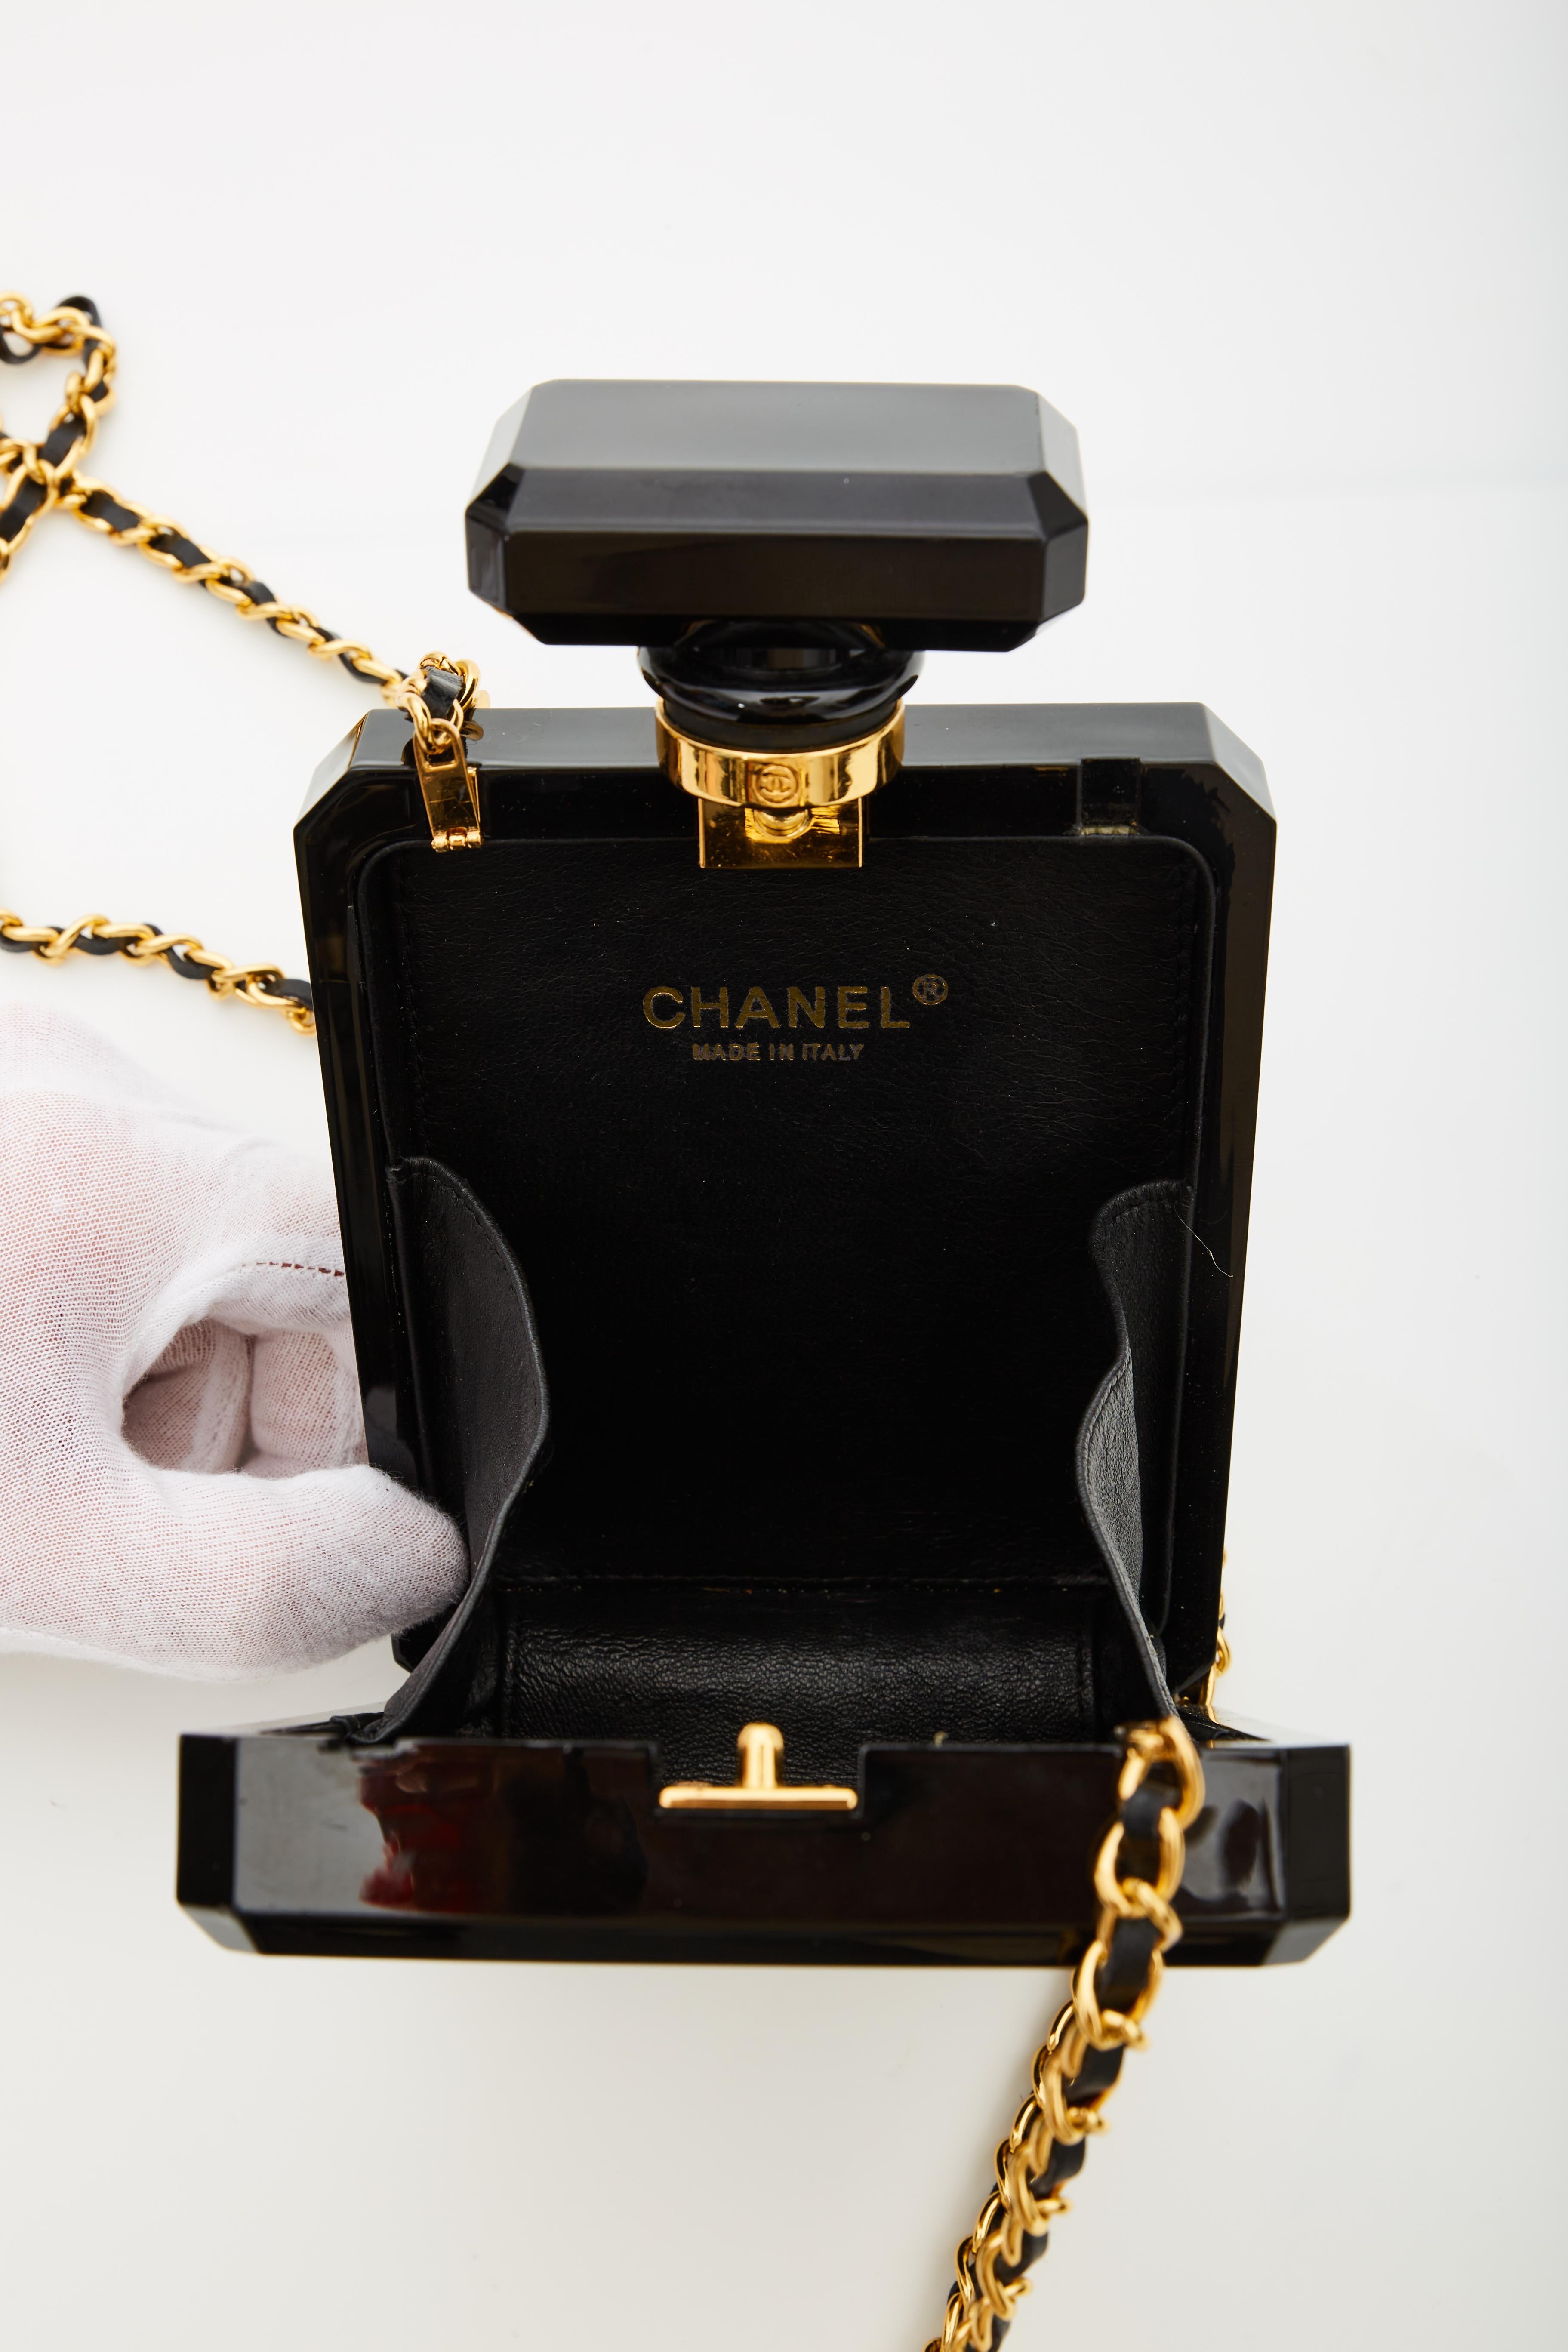 Chanel No5 Perfume Black Limited Edition Evening Shoulder Bag For Sale 6